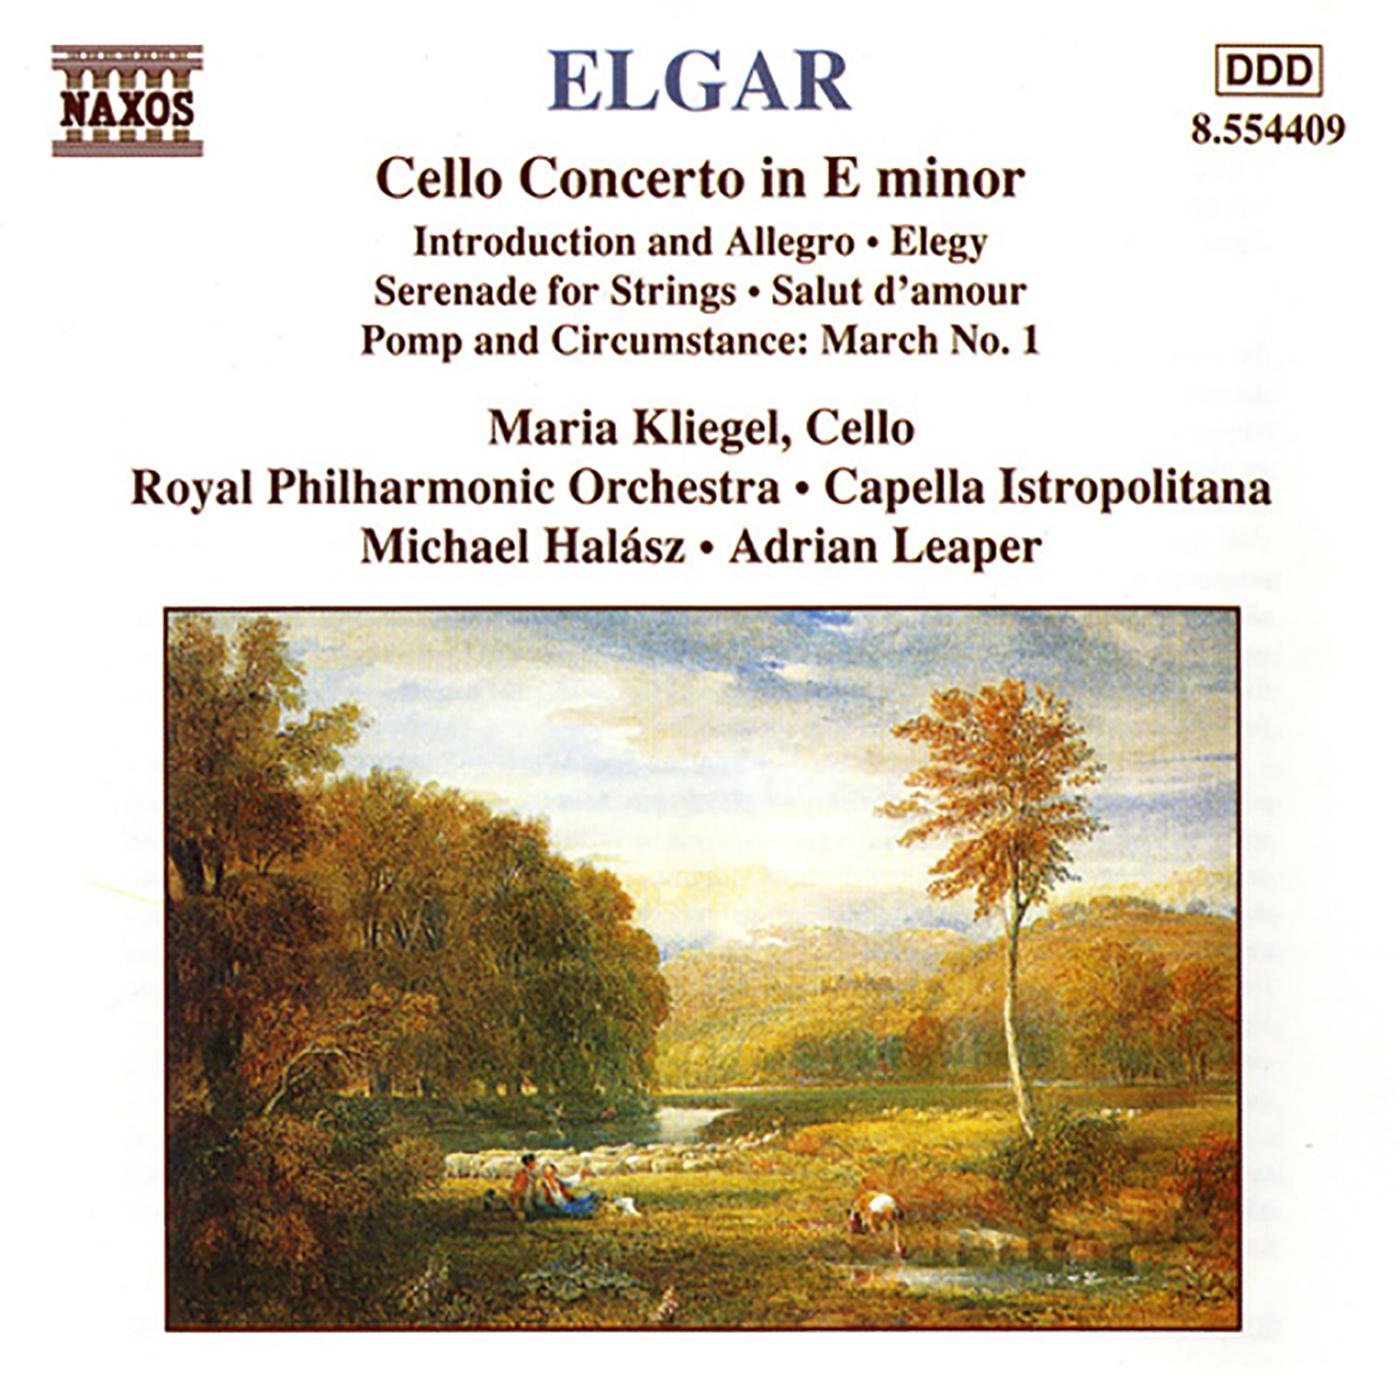 ELGAR: Cello Concerto / Introduction and Allegro / Serenade for Strings